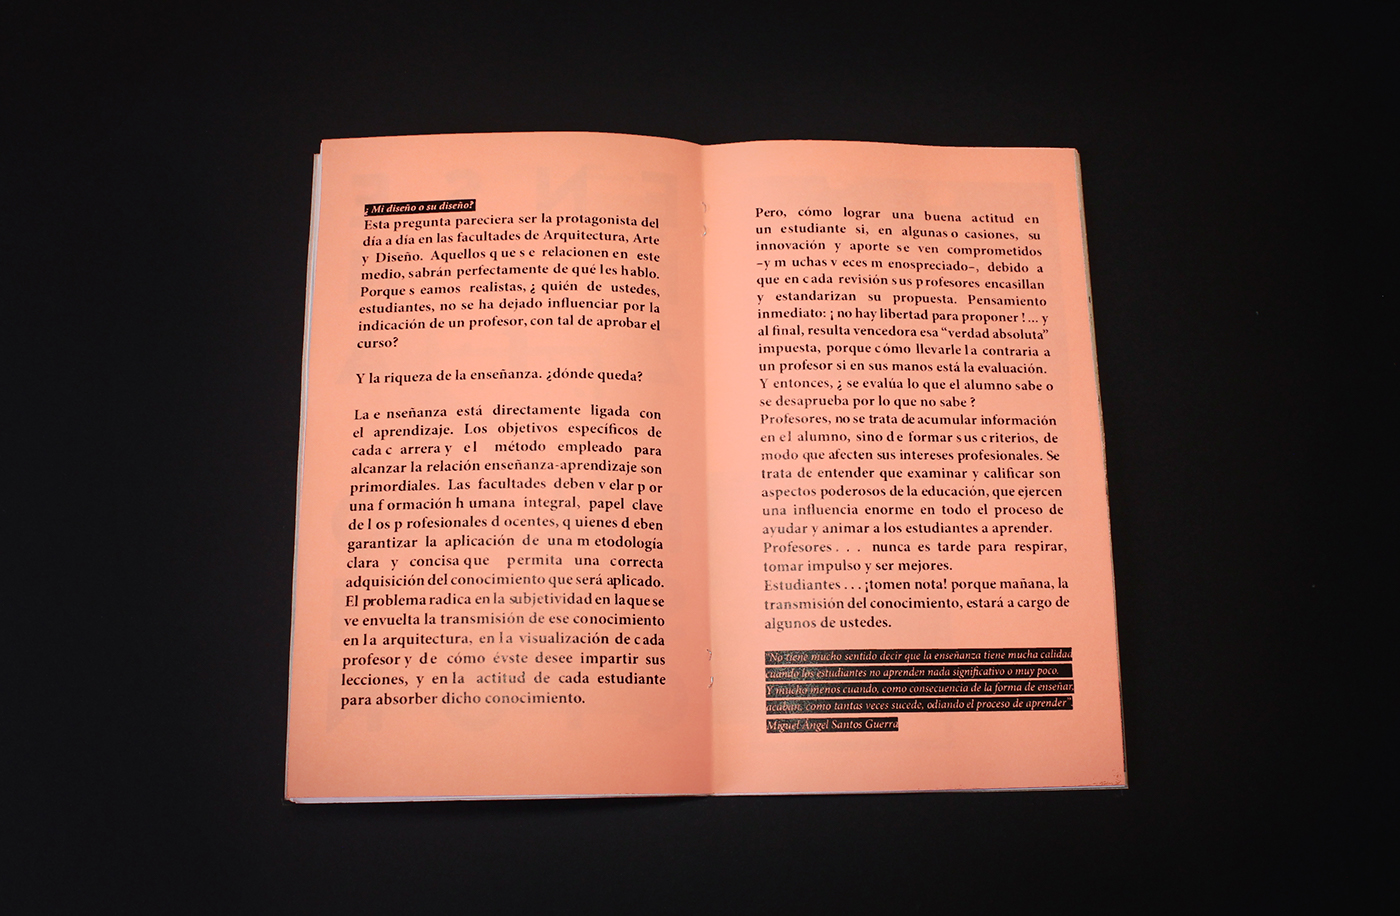 revista zumo magazine digital alicia alice in wonderland paradoja paradoxe contrast pink Exhibition  Zine  fanzine